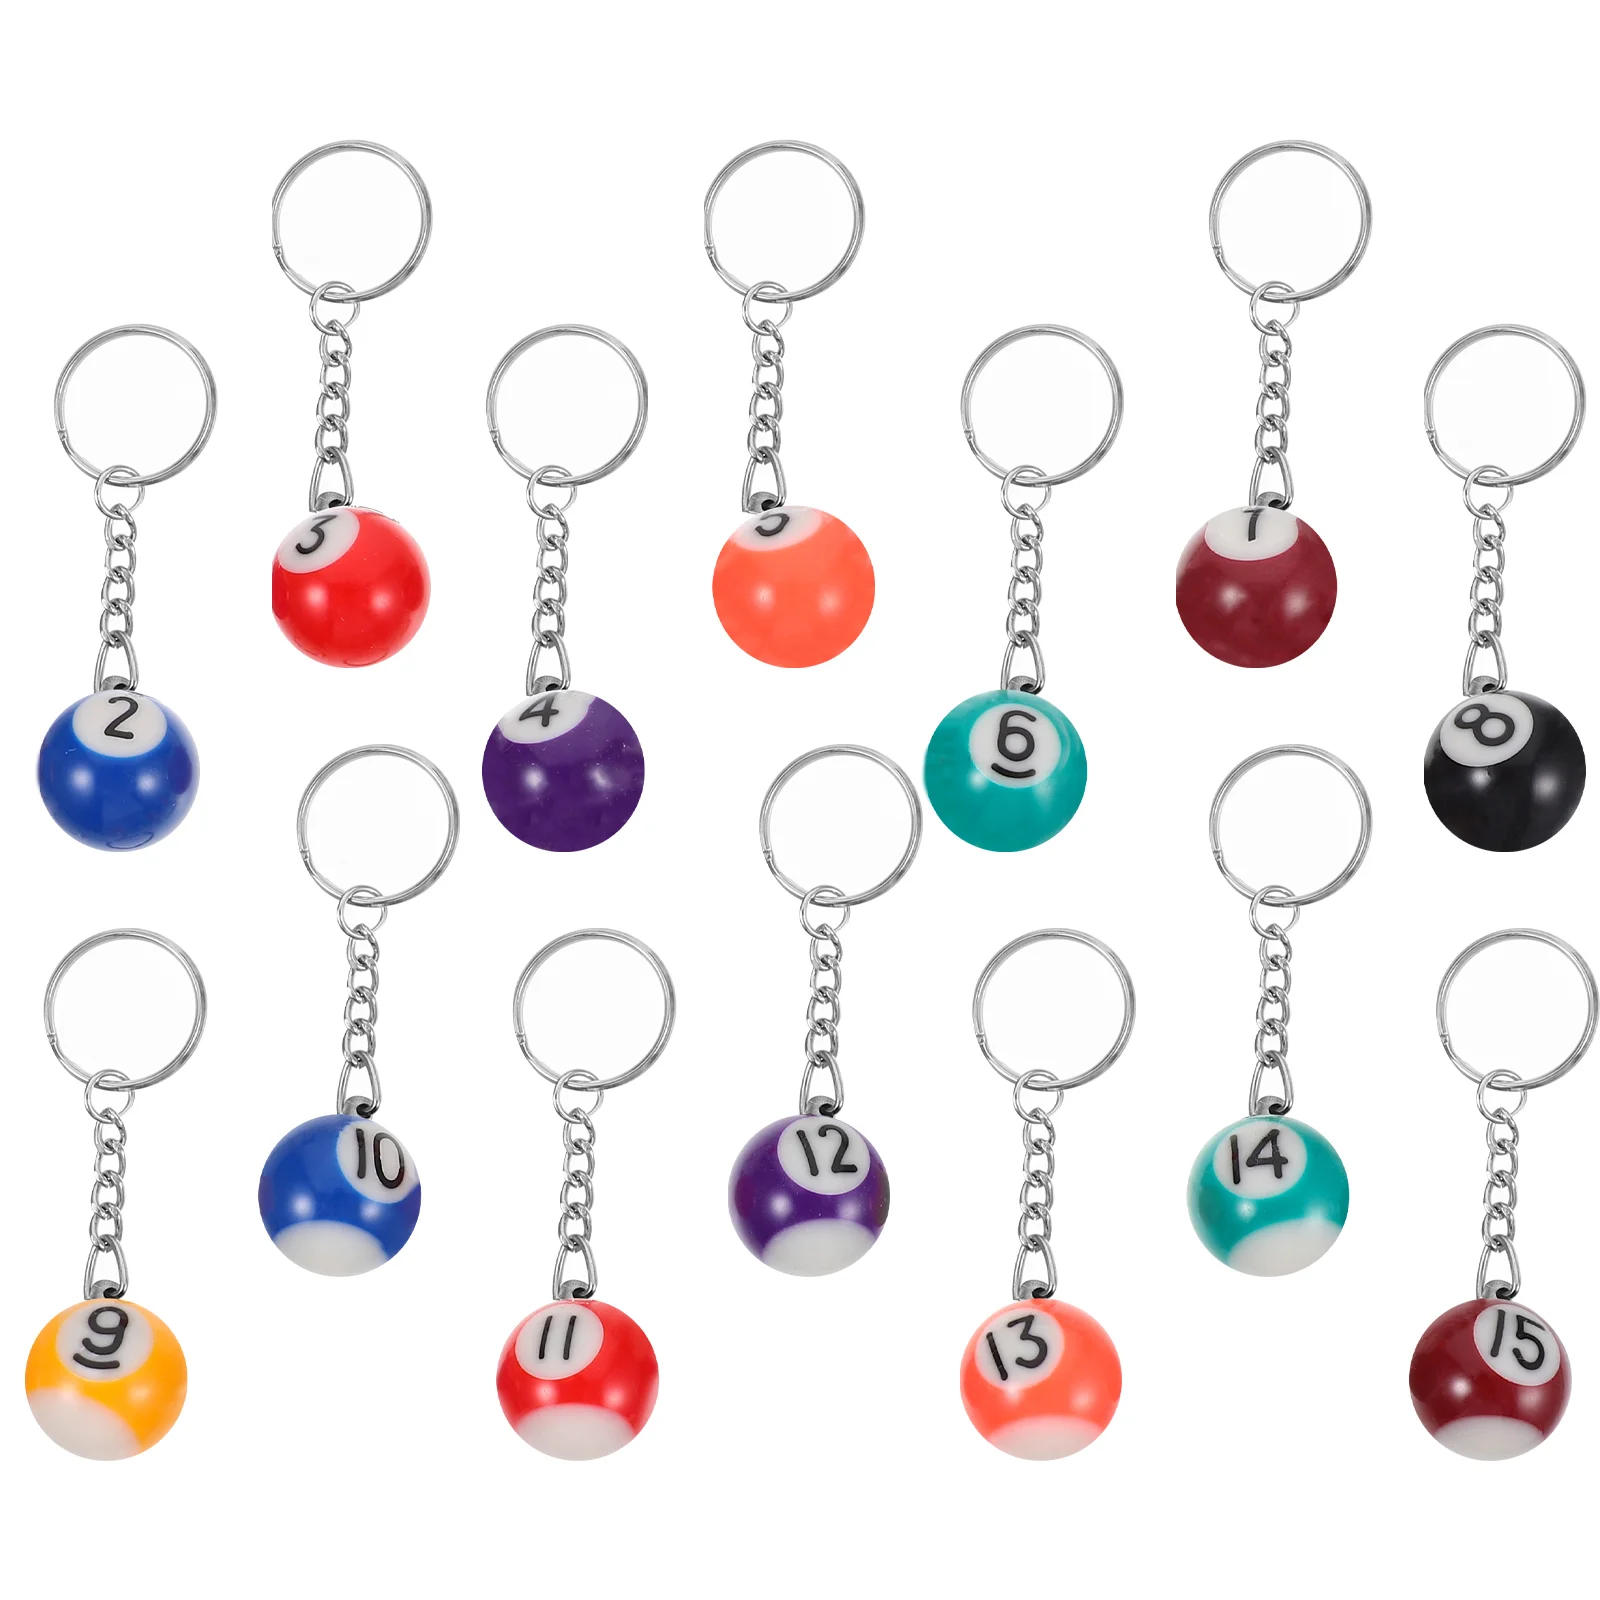 

Ball Football Keychains Pool Key Sports Rings Football Keychain Gifts Match Charm Hanging Keyrings Pendants Chain Balls Mini